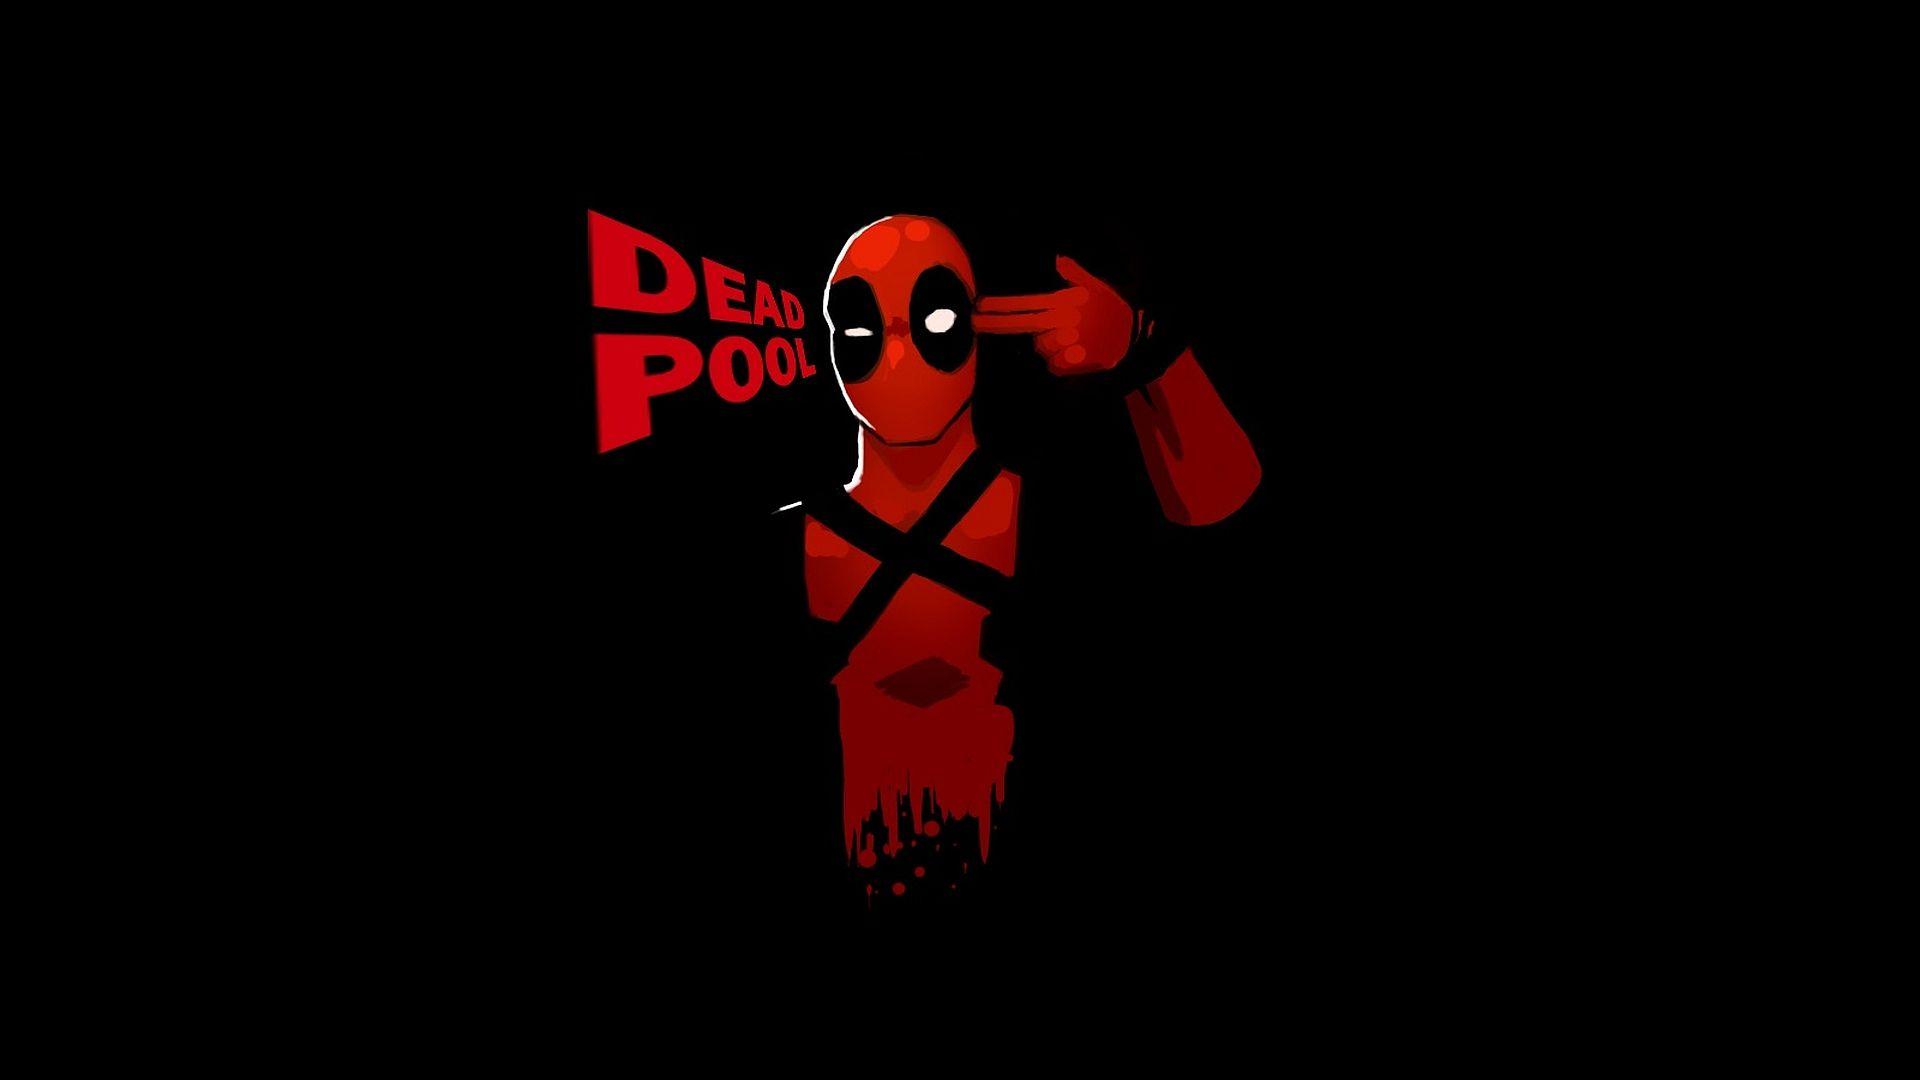 Deadpool Wallpaper Mobile. Deadpool wallpaper, Deadpool HD wallpaper, Deadpool logo wallpaper